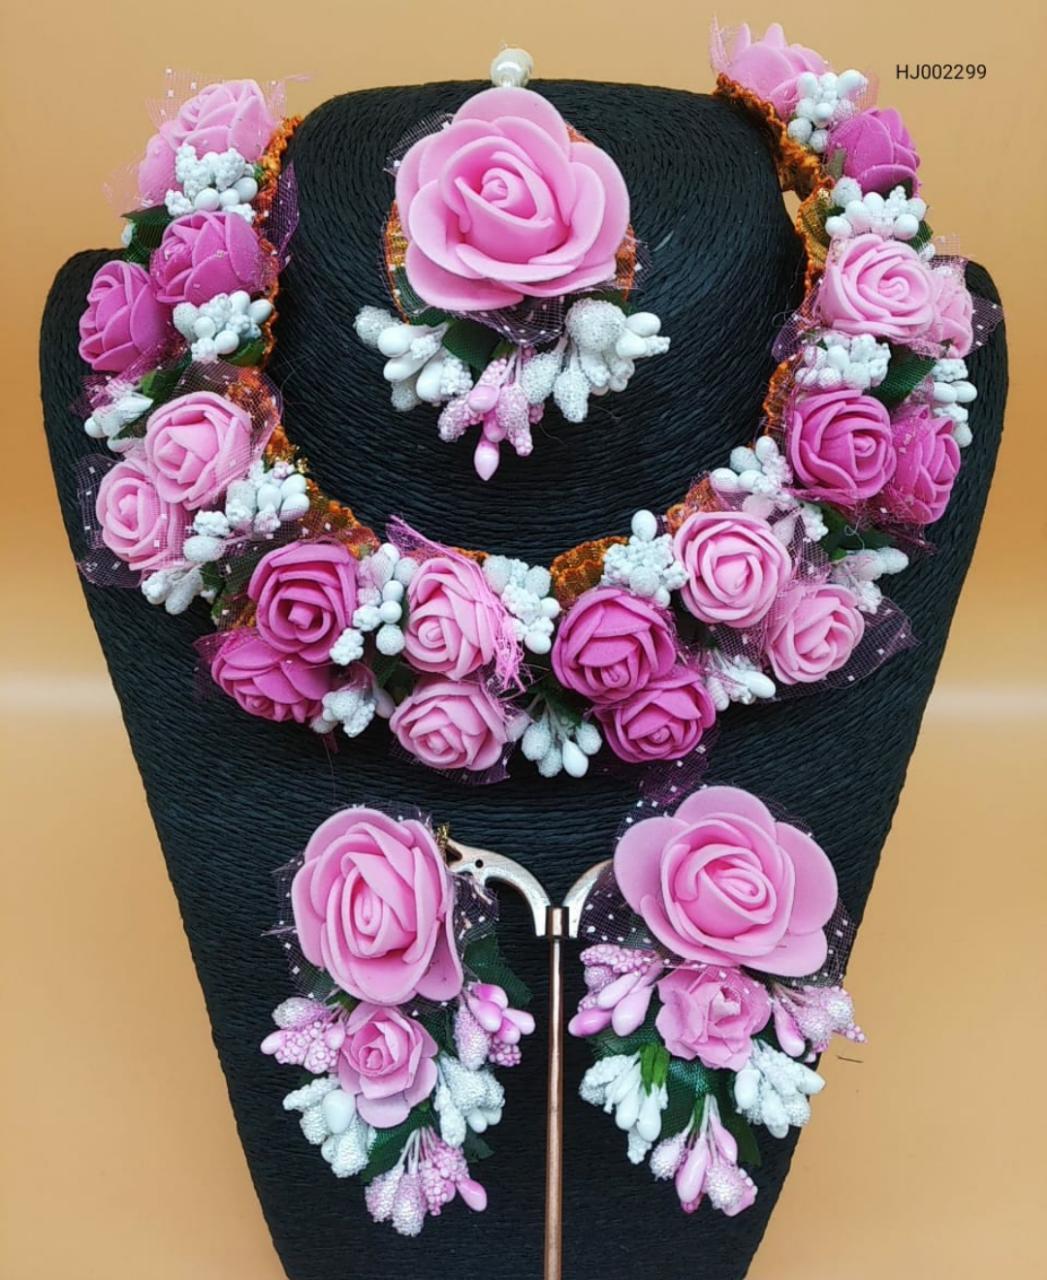 Special flower jewellery set